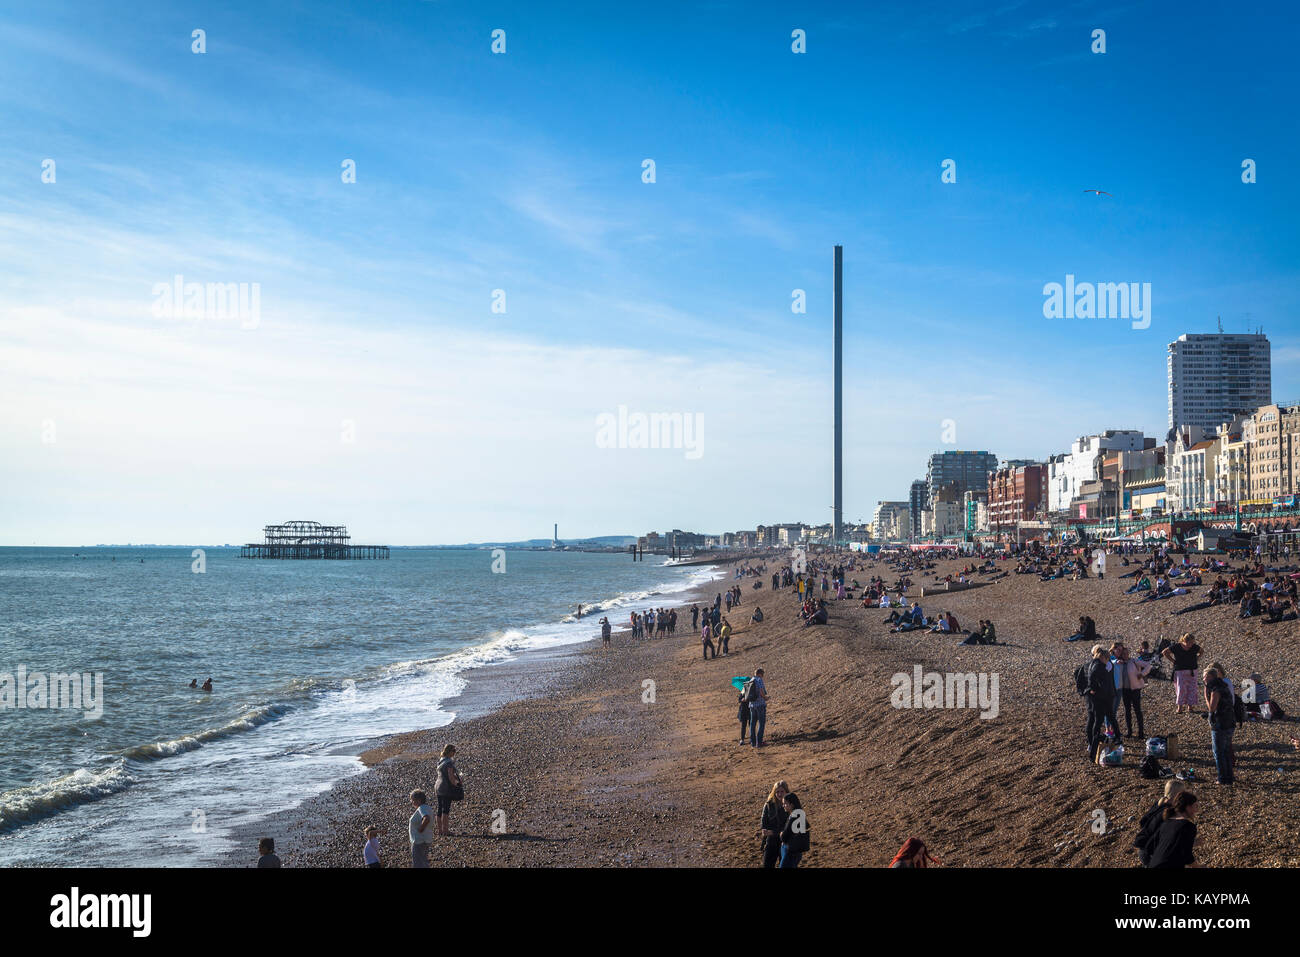 Brighton Beach, West Pier and British Airways i360 observation tower, Brighton, England, UK Stock Photo